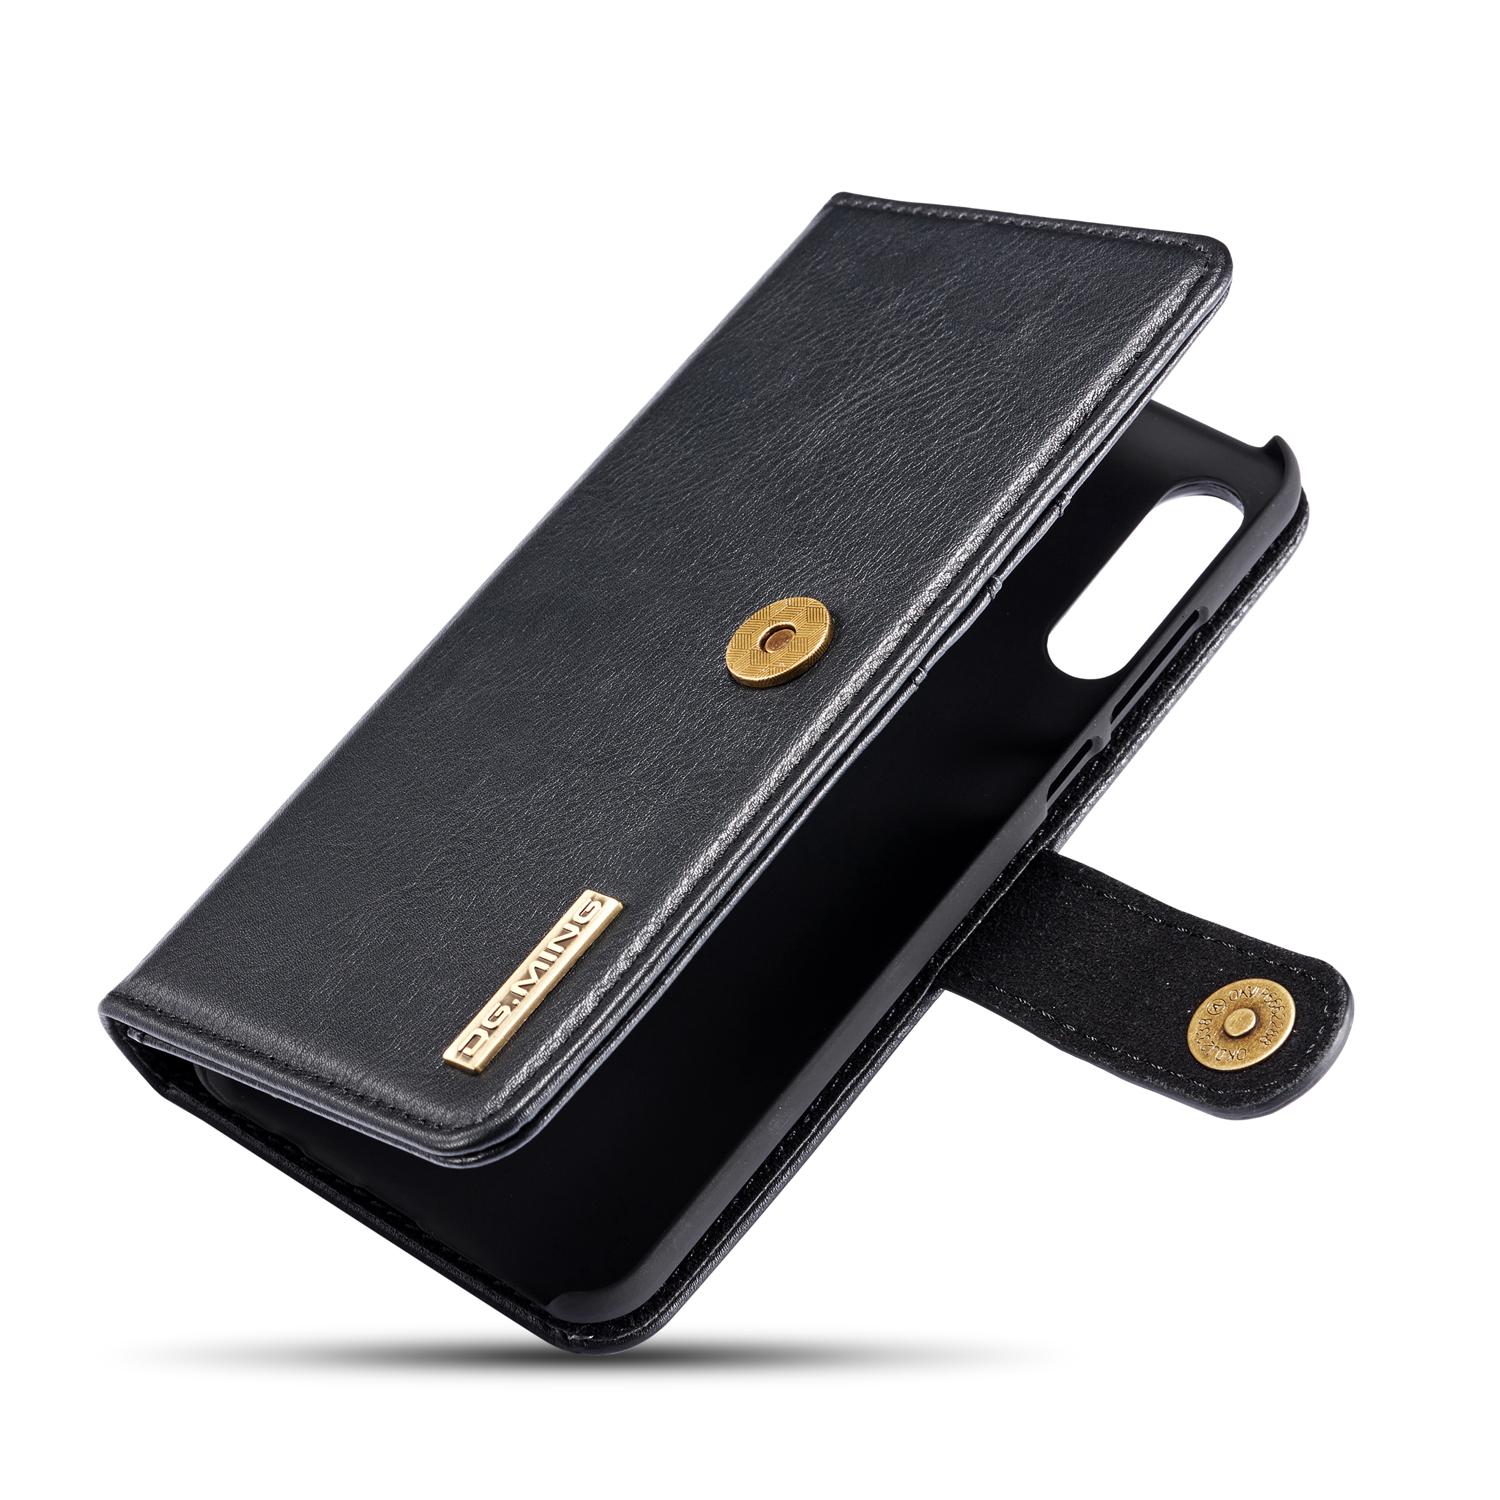 Magnet Wallet Huawei P30 Lite Black